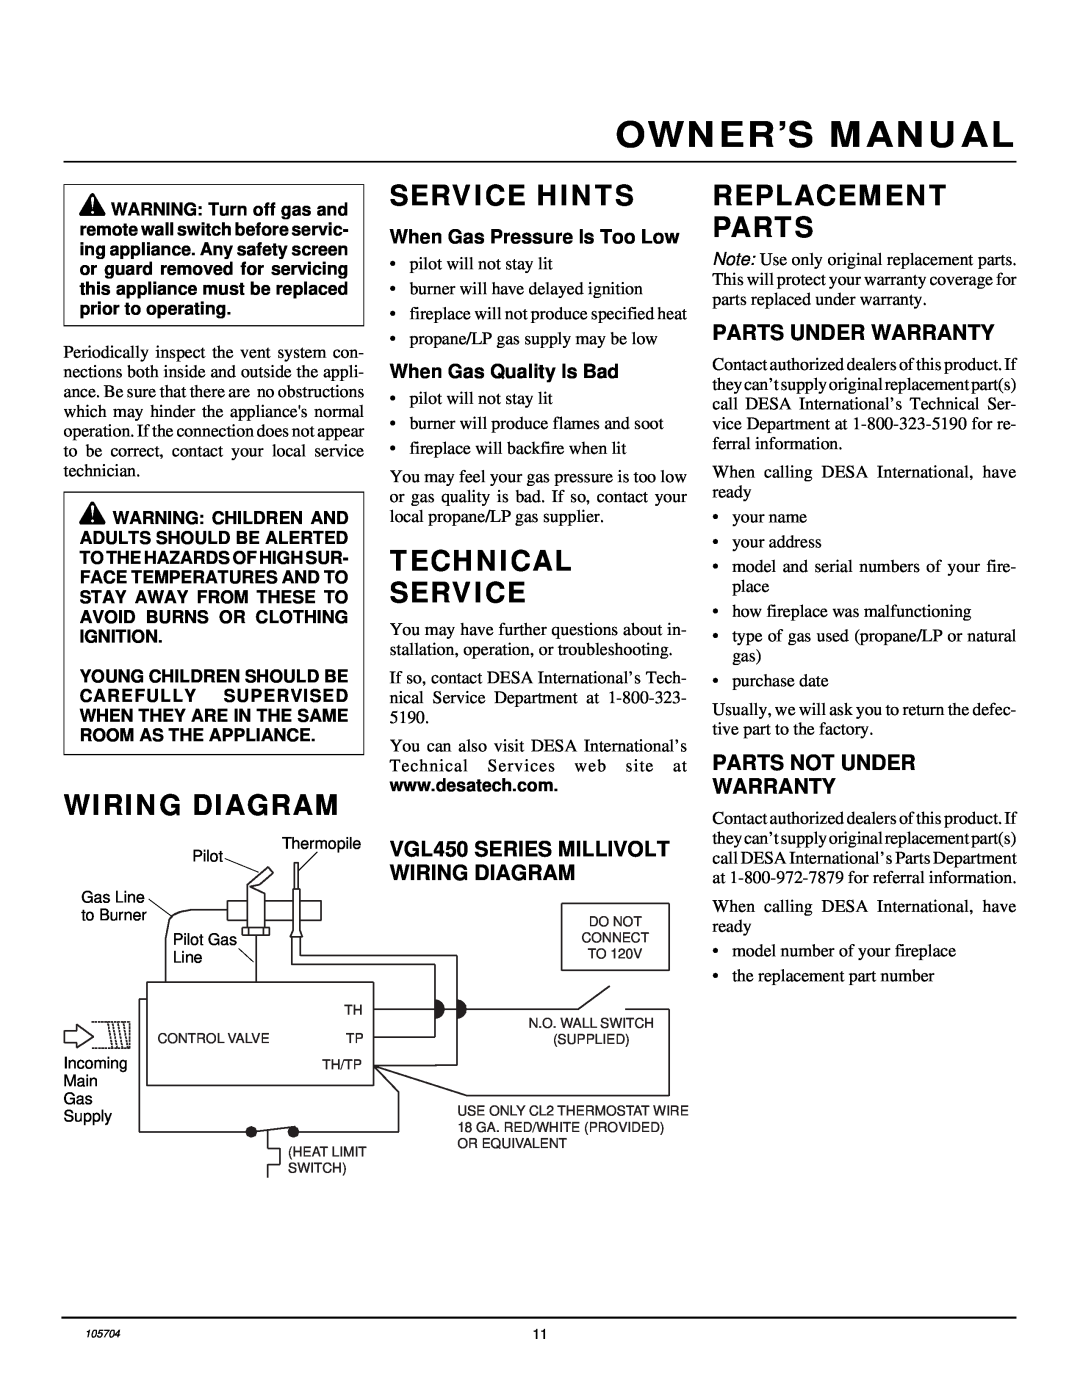 Desa VGL450N, VGL450P Wiring Diagram, Service Hints, Technical Service, Replacement Parts, Parts Under Warranty 